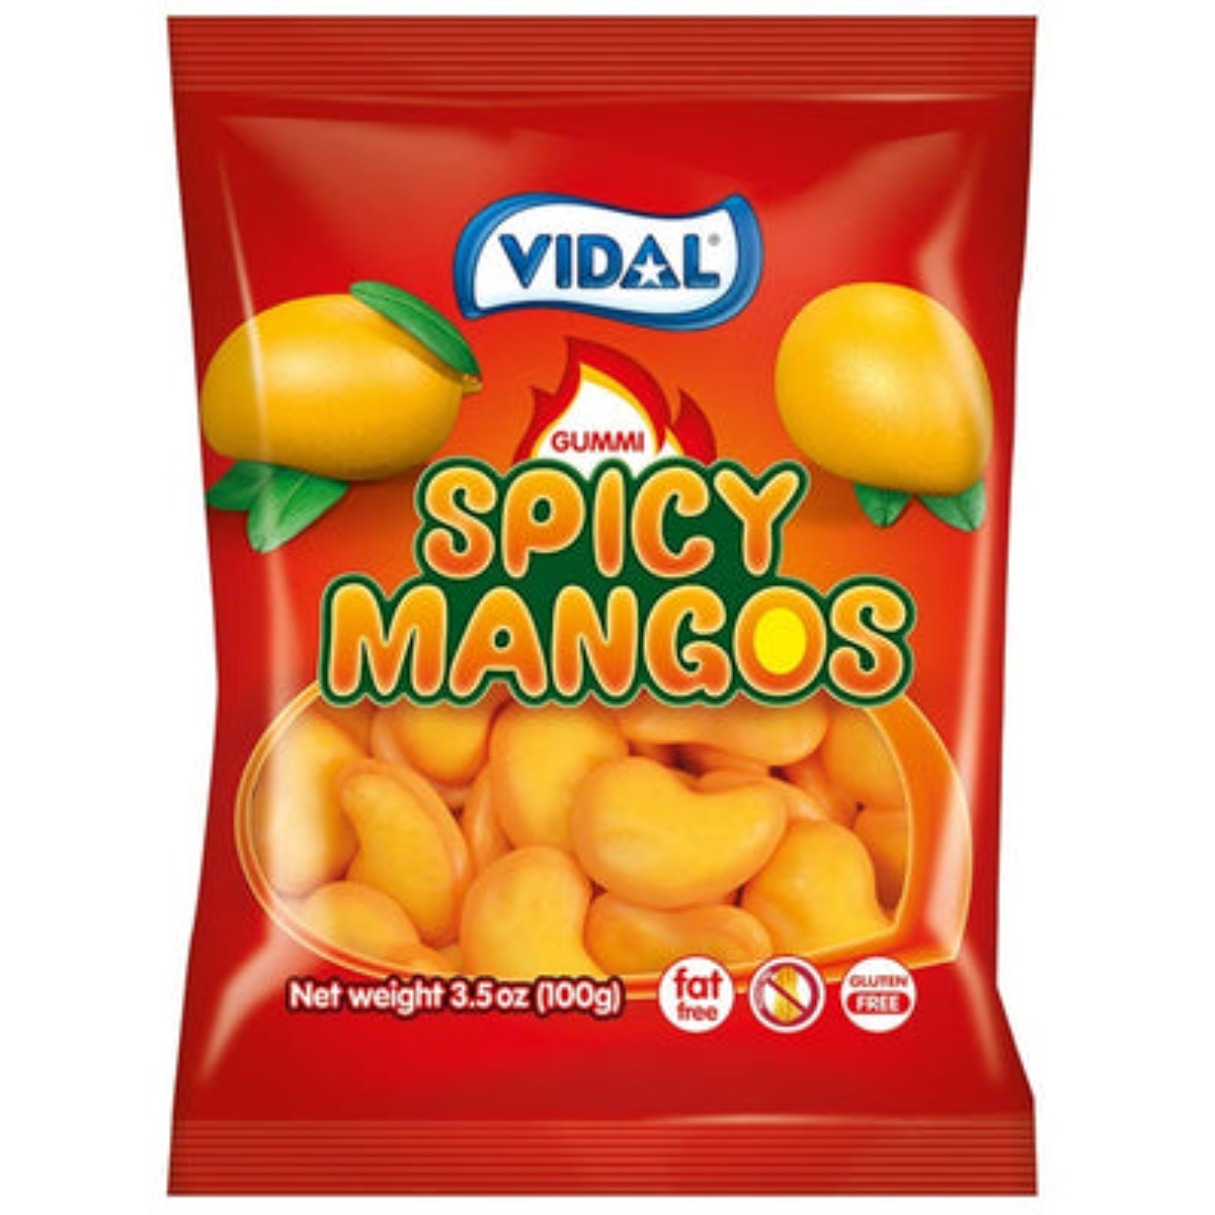 Vidal Gummi Spicy Mangos Bag 3.5oz - 14ct